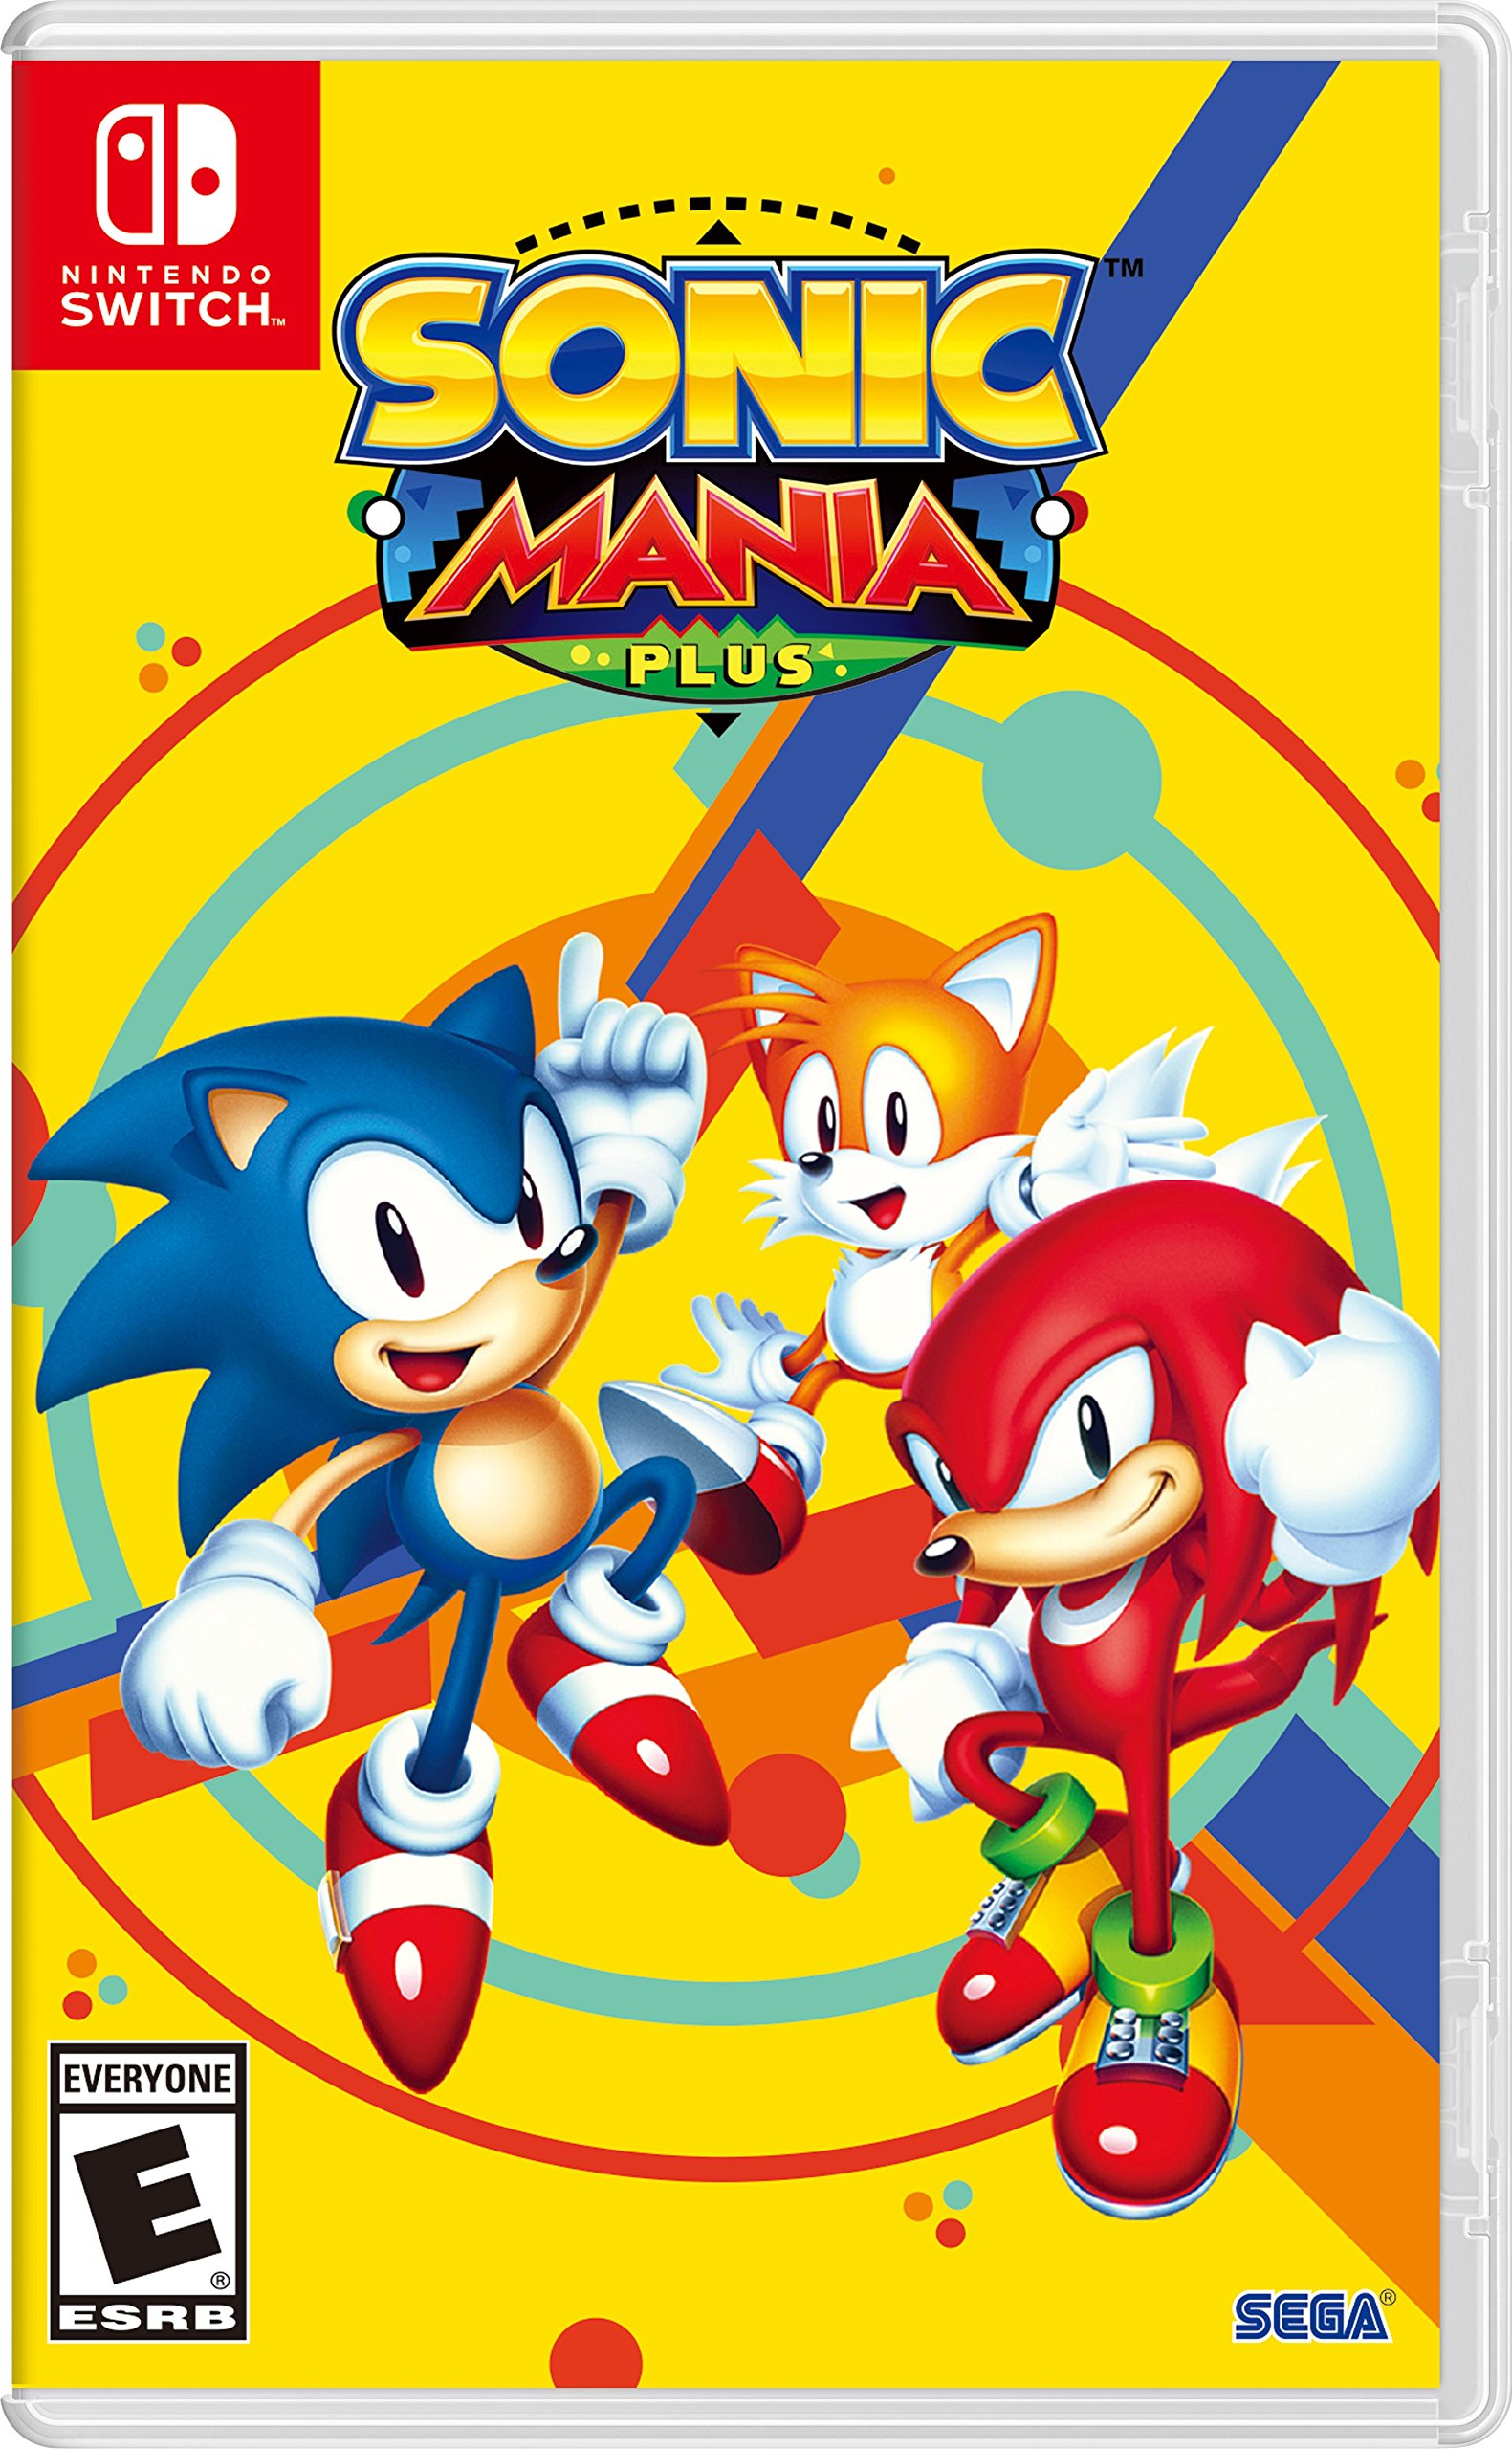 Sonic Mania Plus - da MegaDrive à PlayStation e Xbox, a magia da SEGA -  4gnews